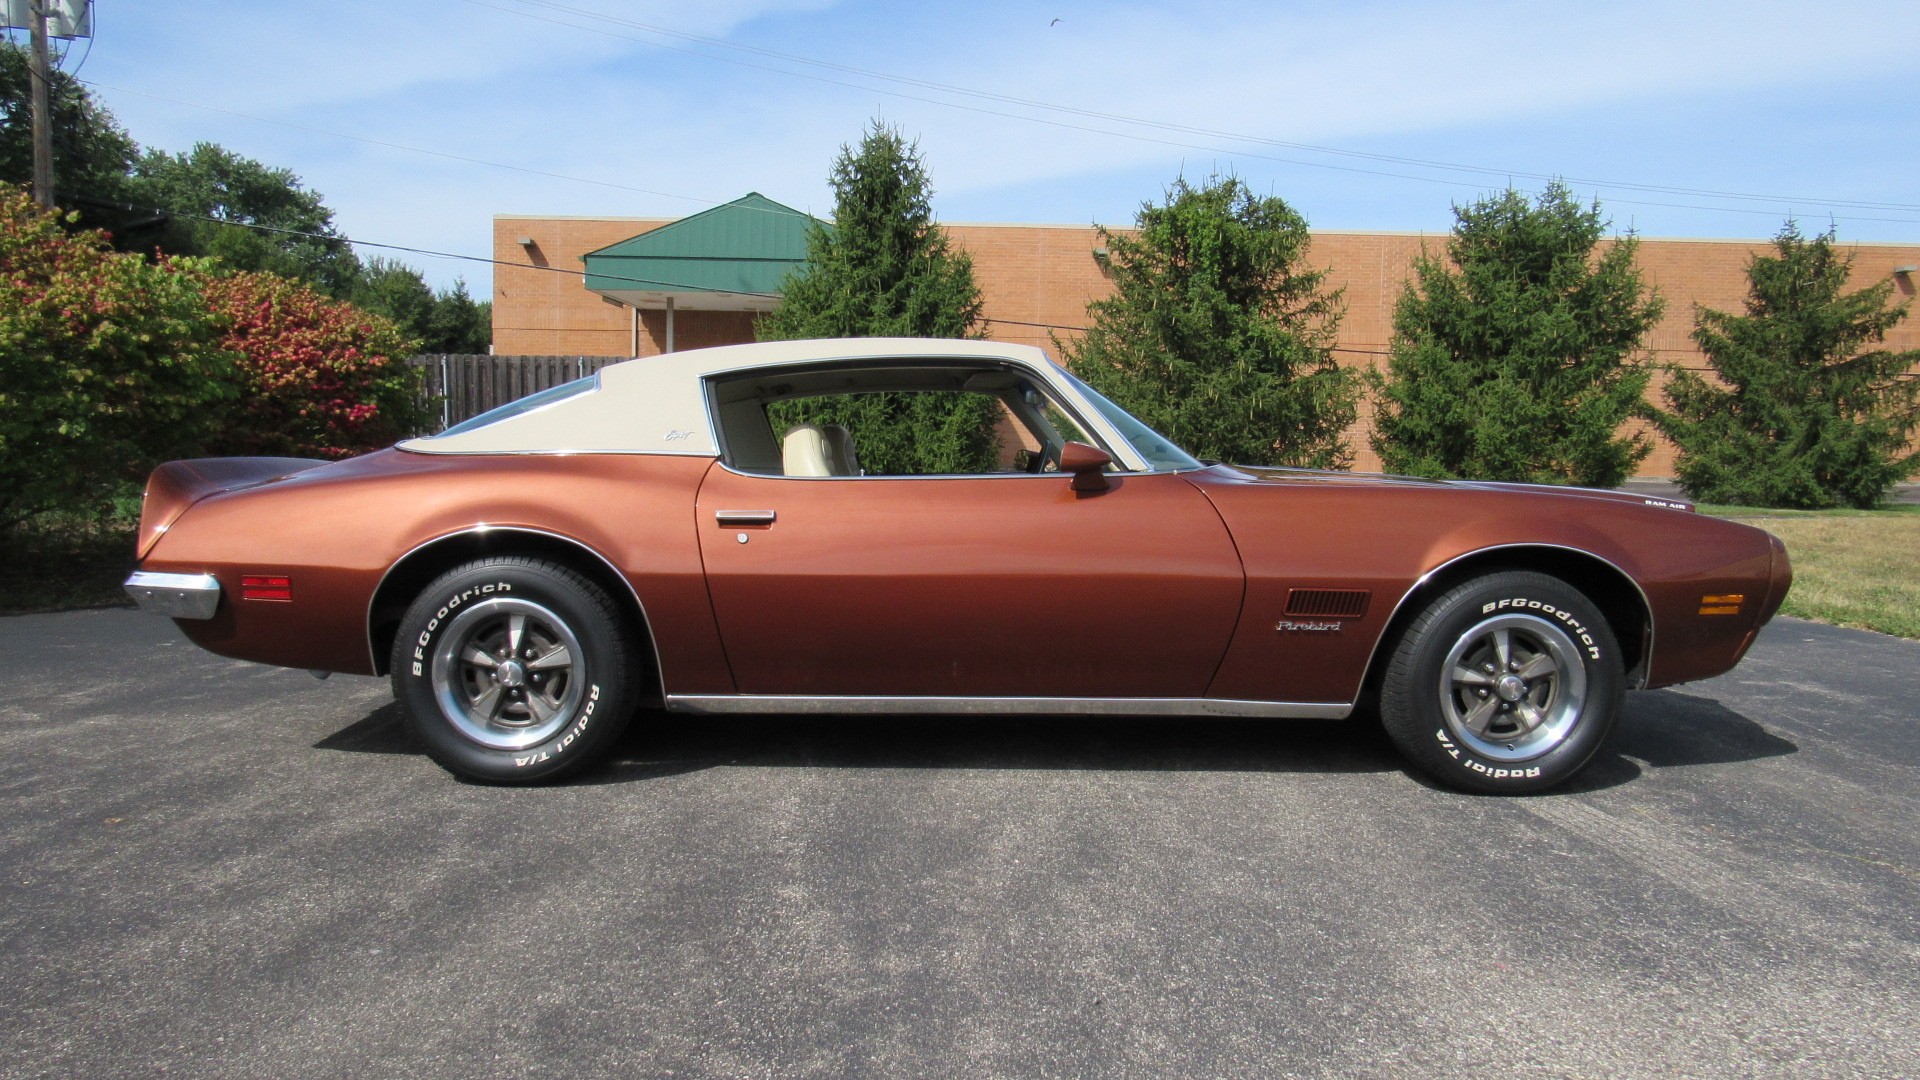 1971 Pontiac Esprit, Auto, 350, Restored, SOLD!